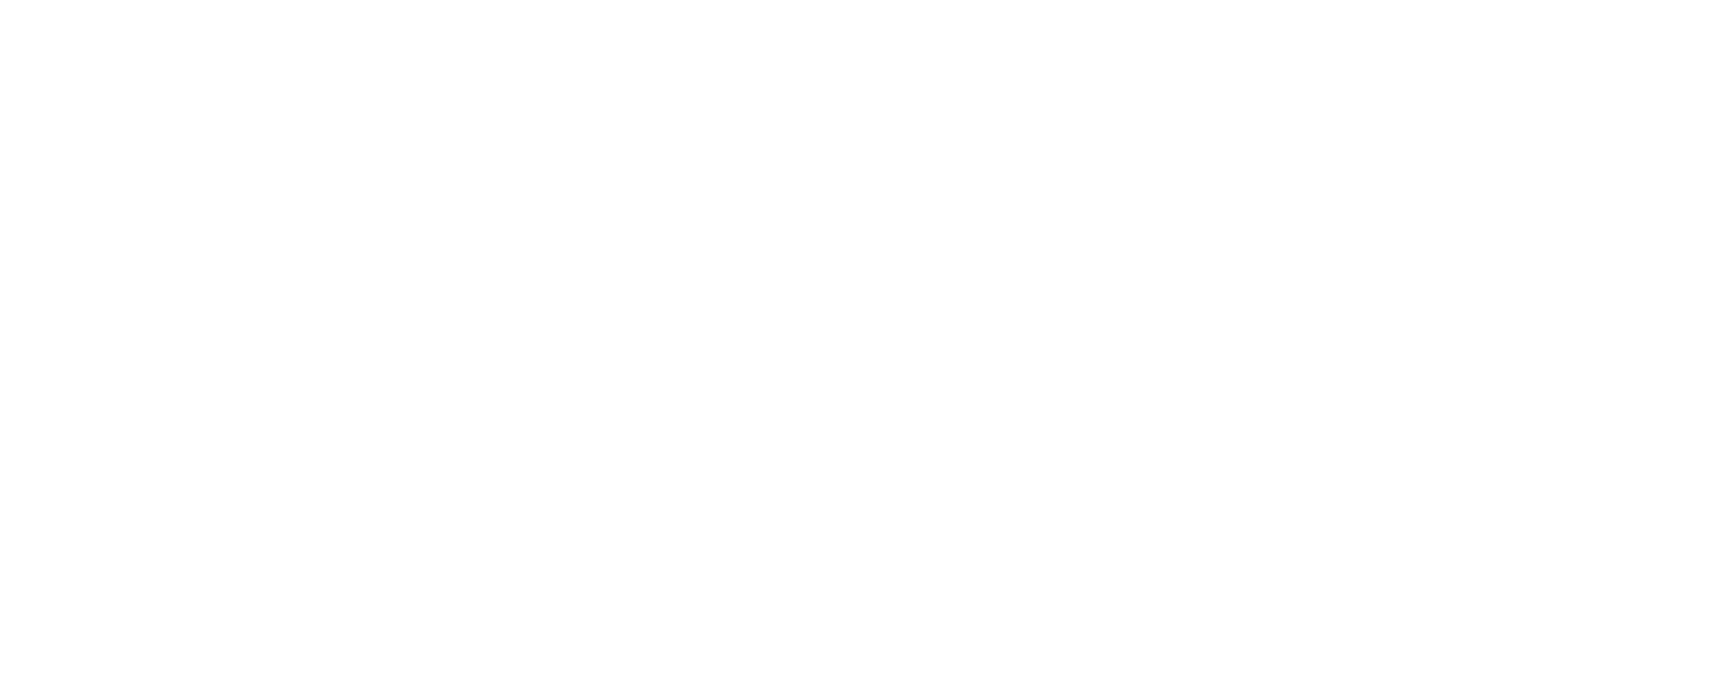 RLX Technology logo large for dark backgrounds (transparent PNG)